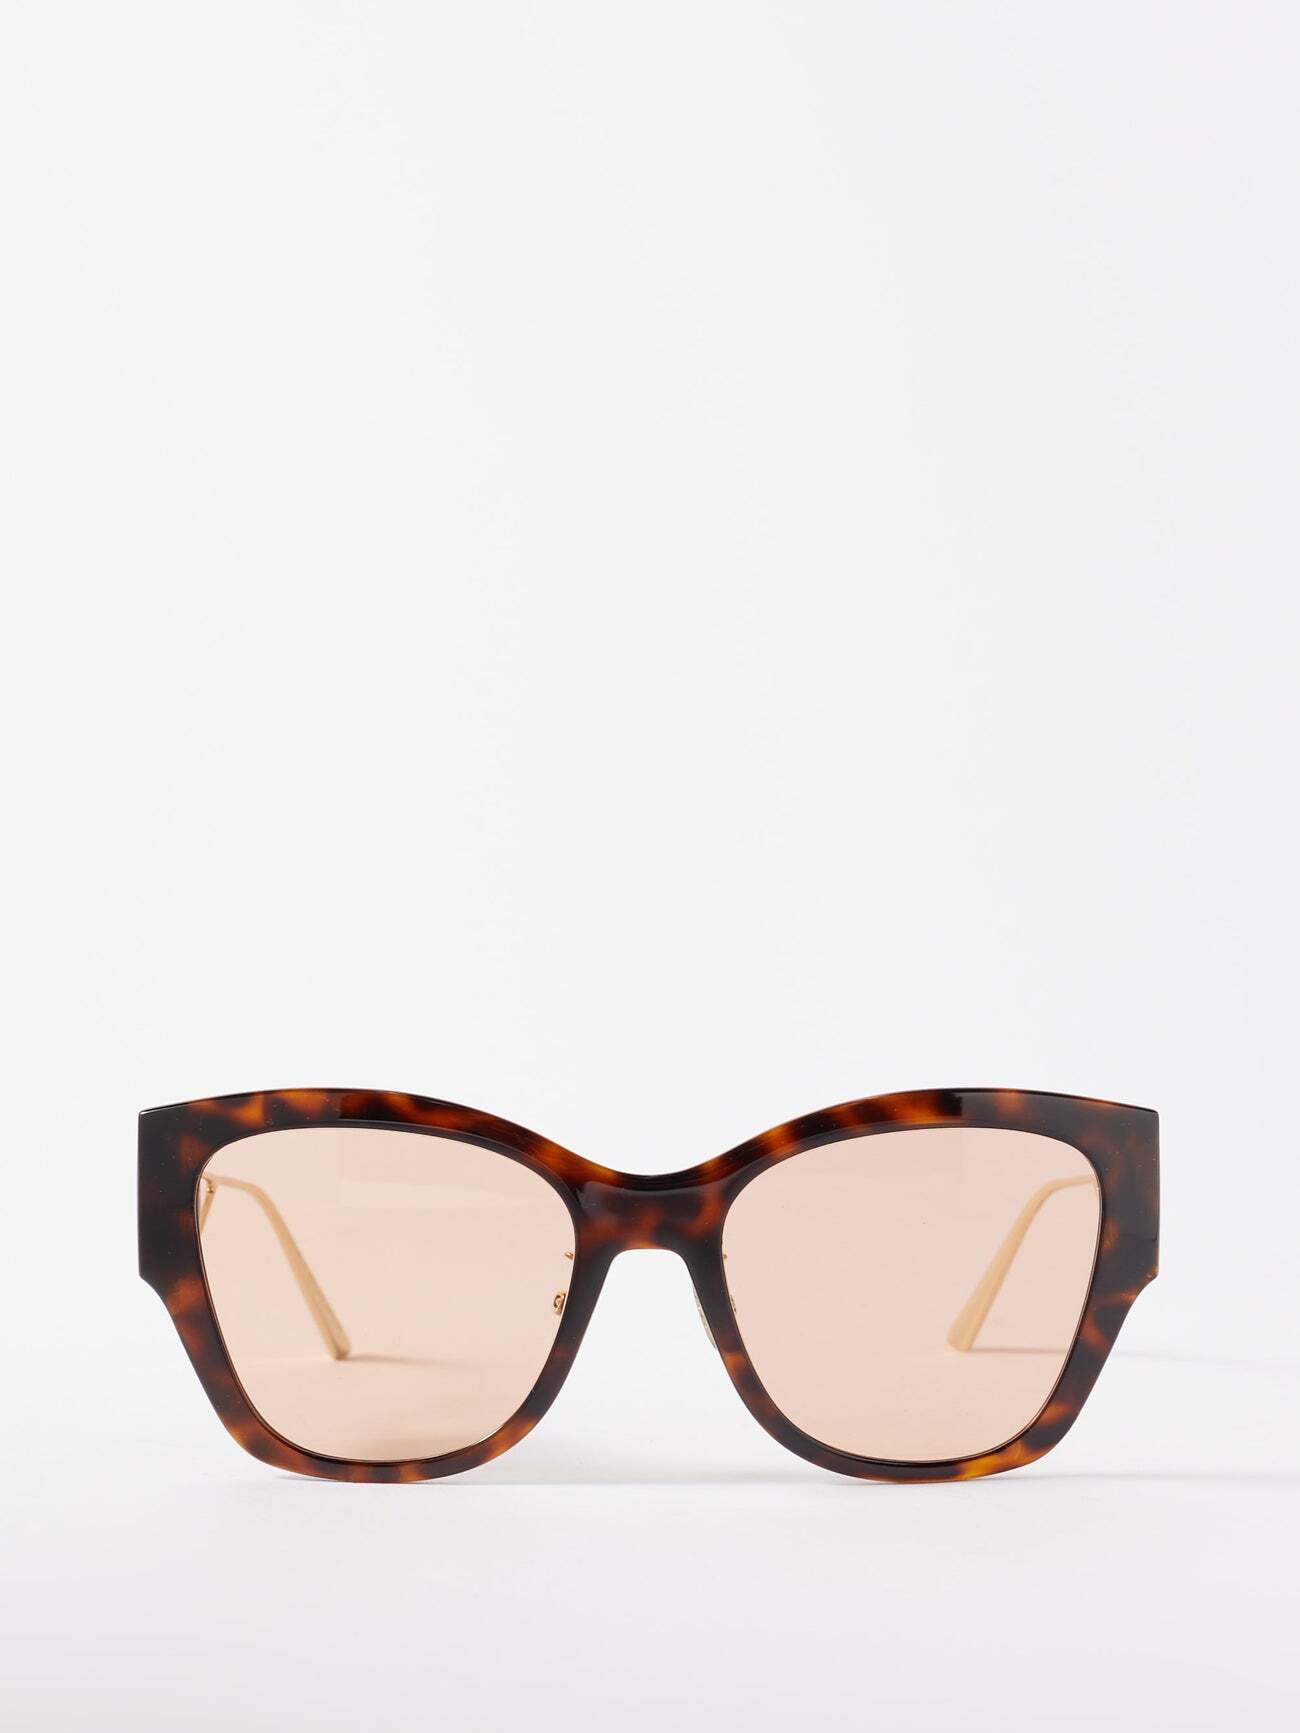 Dior - 30montaigne B2u Butterfly Acetate Sunglasses - Womens - Brown Multi